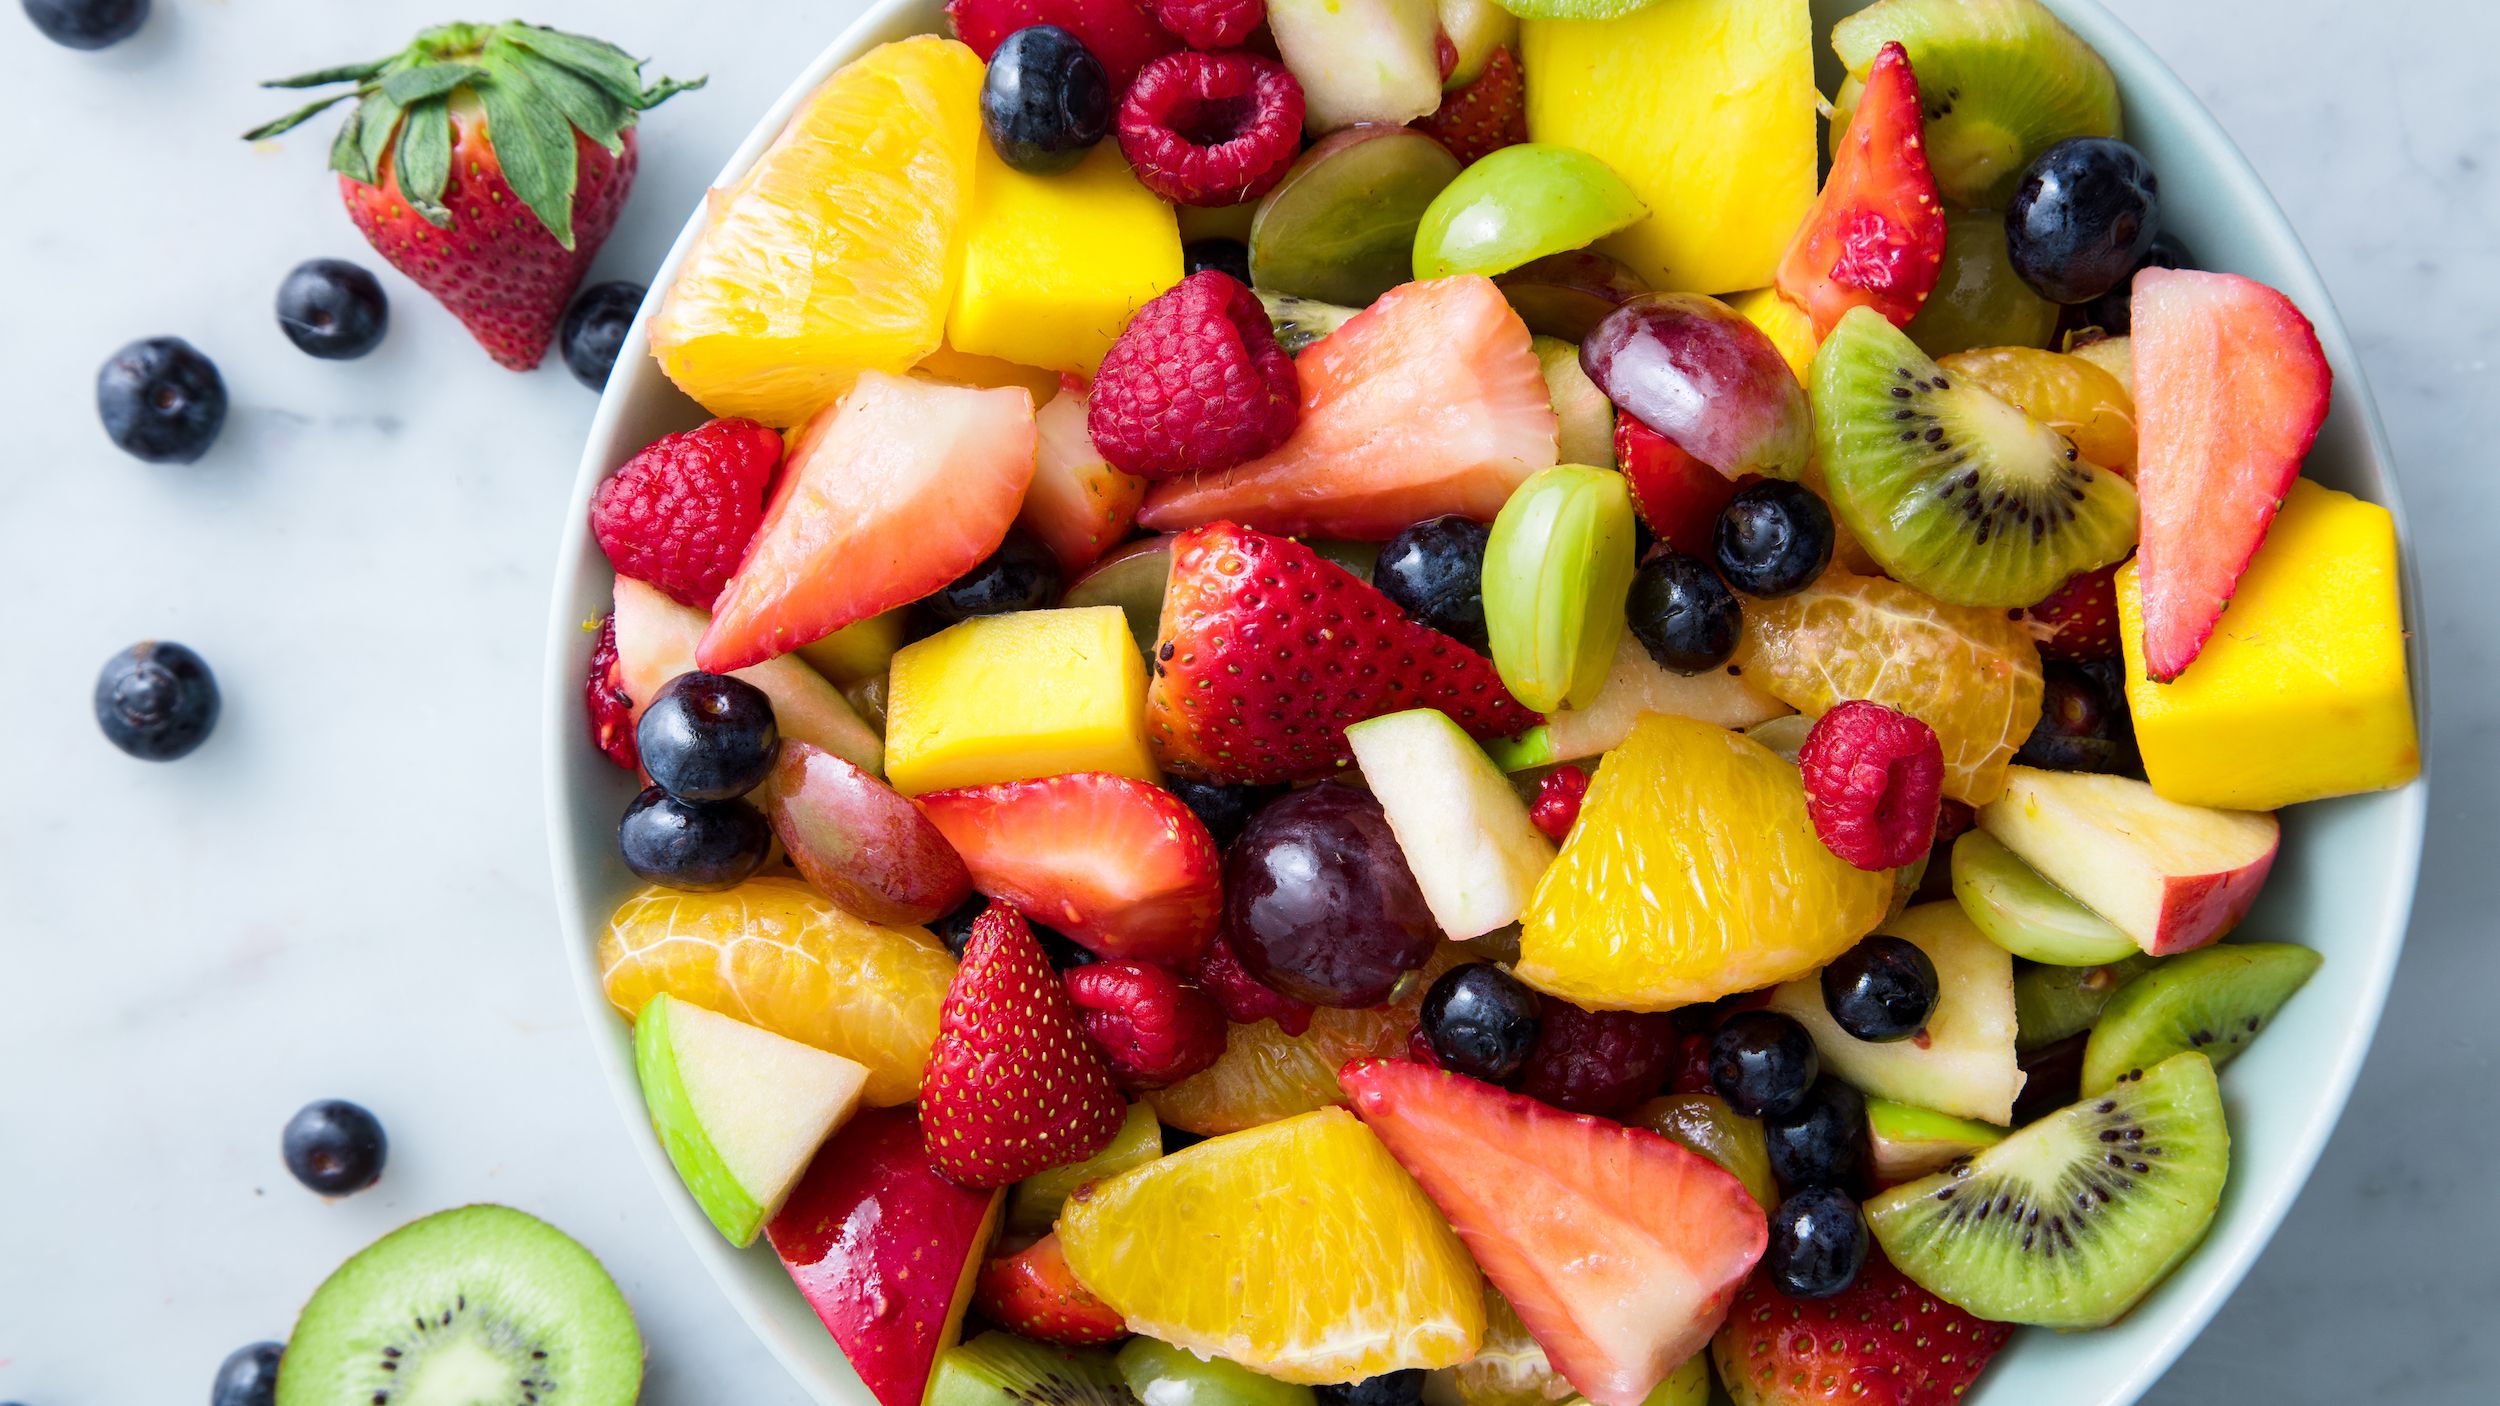 Easy Fruit Salad Recipe - How to Make Fruit Salad